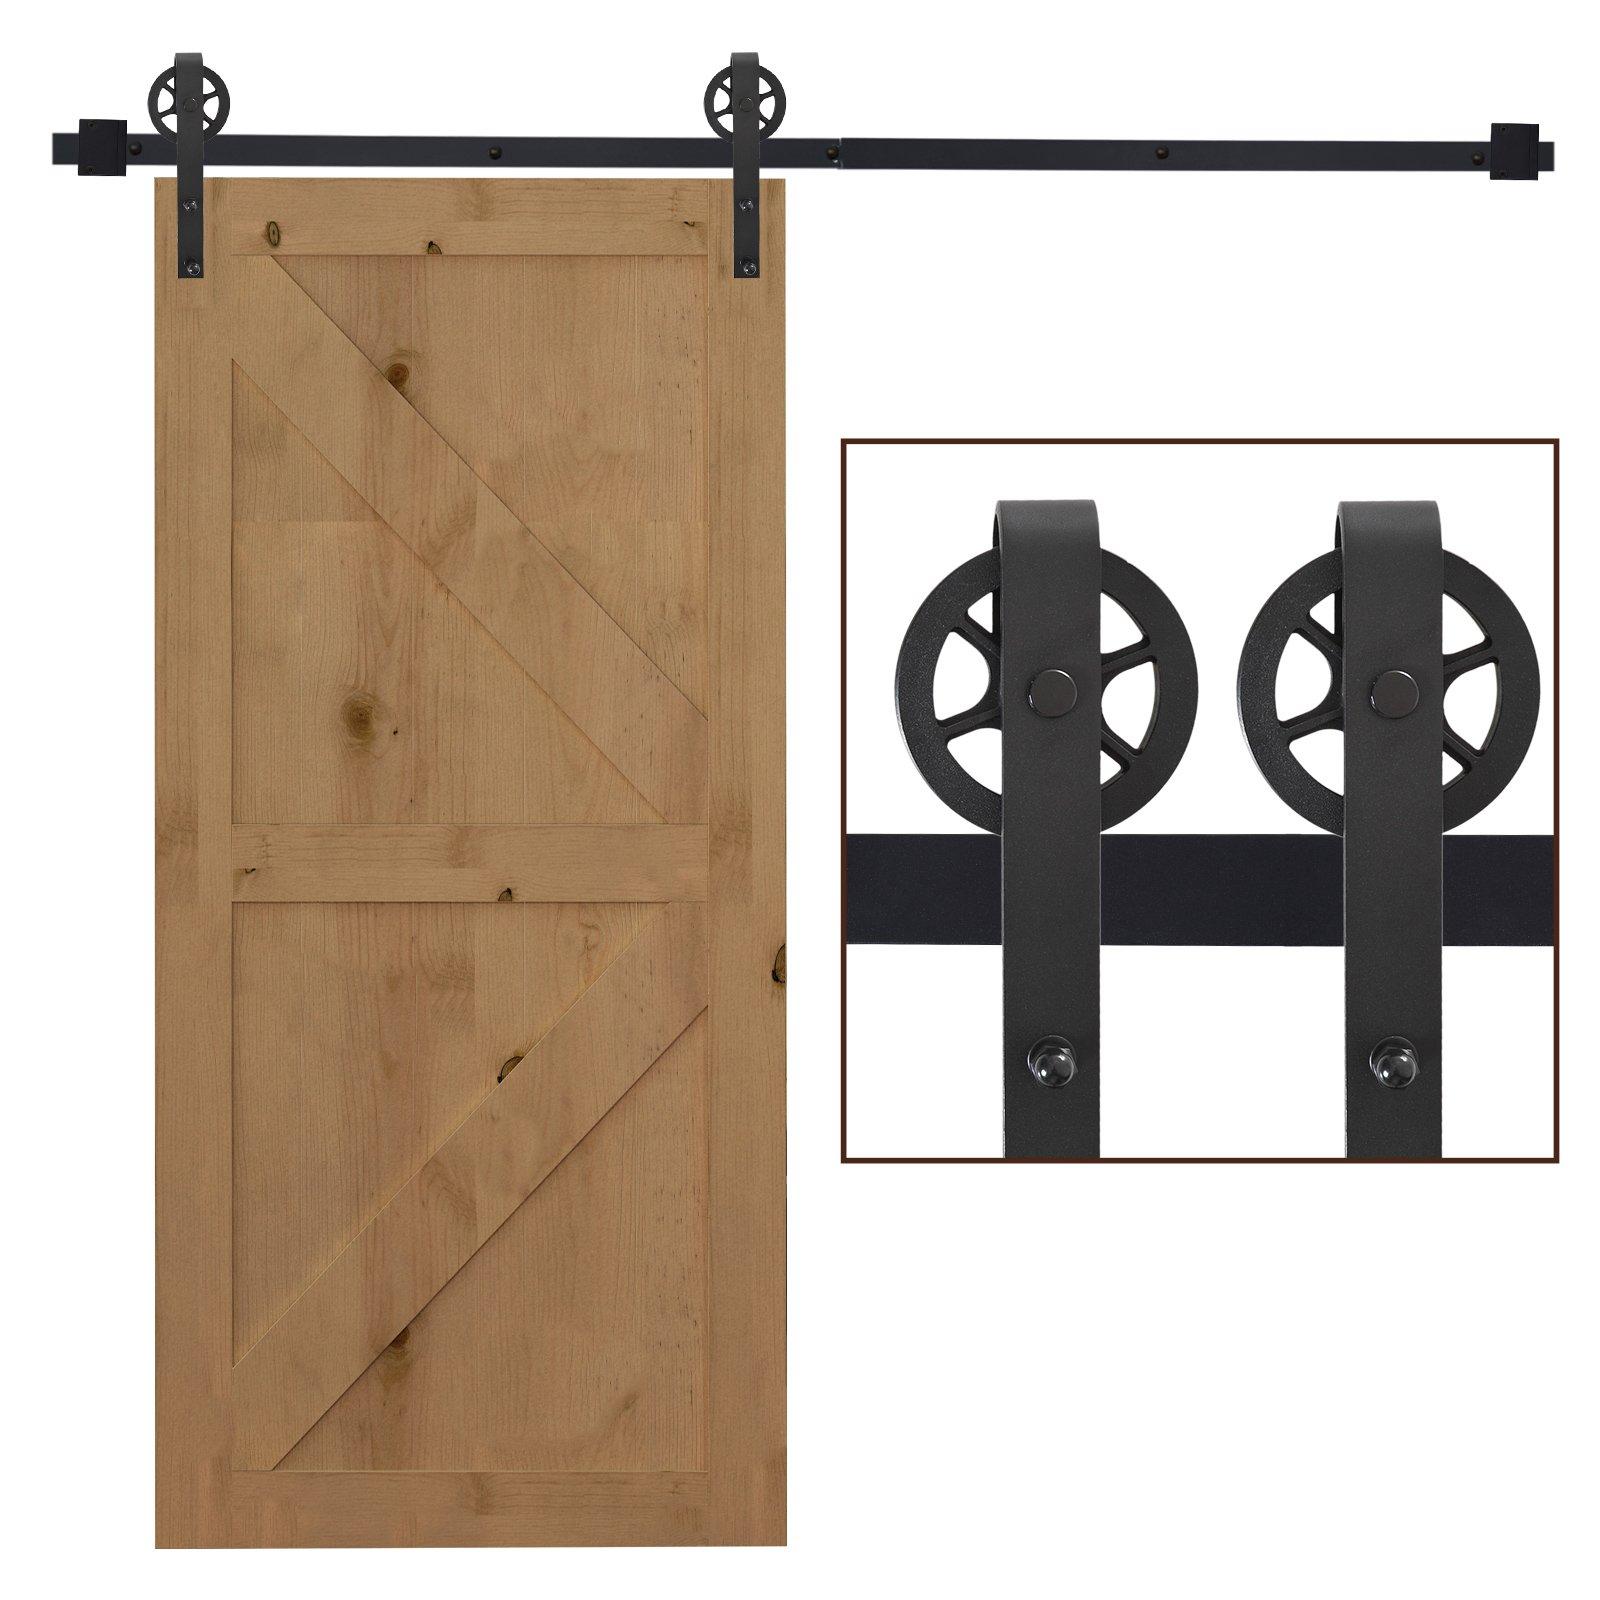 6.6ft Sliding Wood Barn Door Hardware Kits Track Roller Industrial